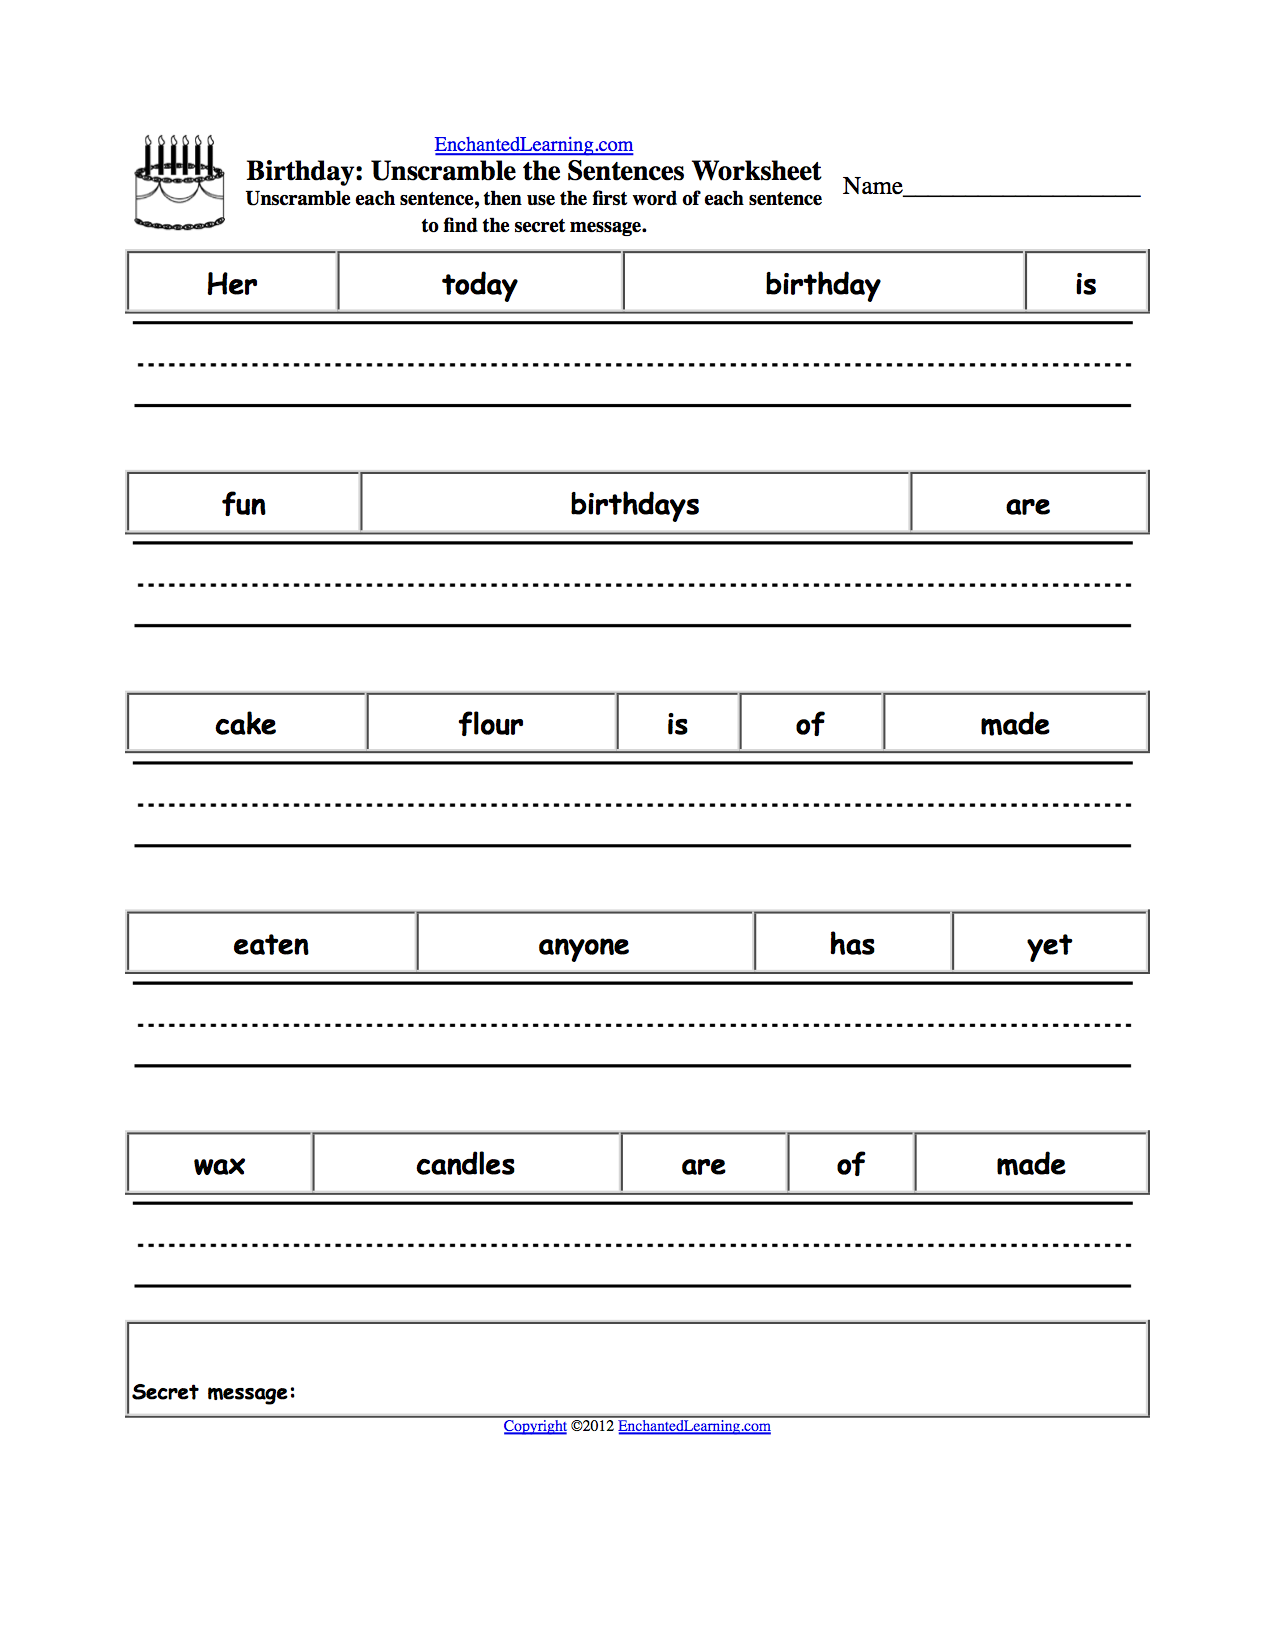 printables-simple-sentence-worksheet-tempojs-thousands-of-printable